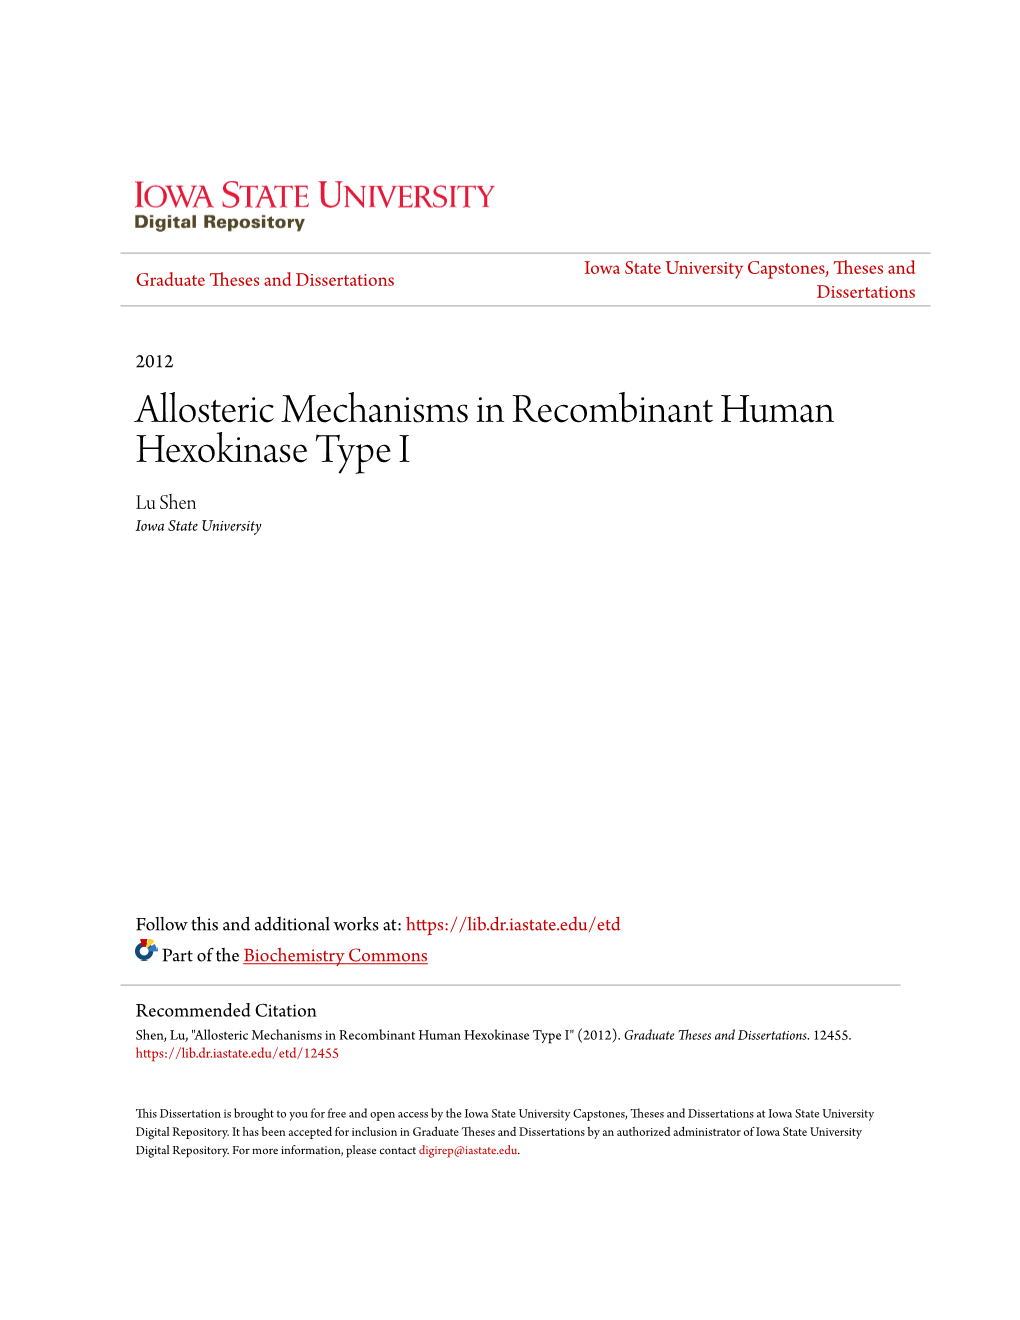 Allosteric Mechanisms in Recombinant Human Hexokinase Type I Lu Shen Iowa State University